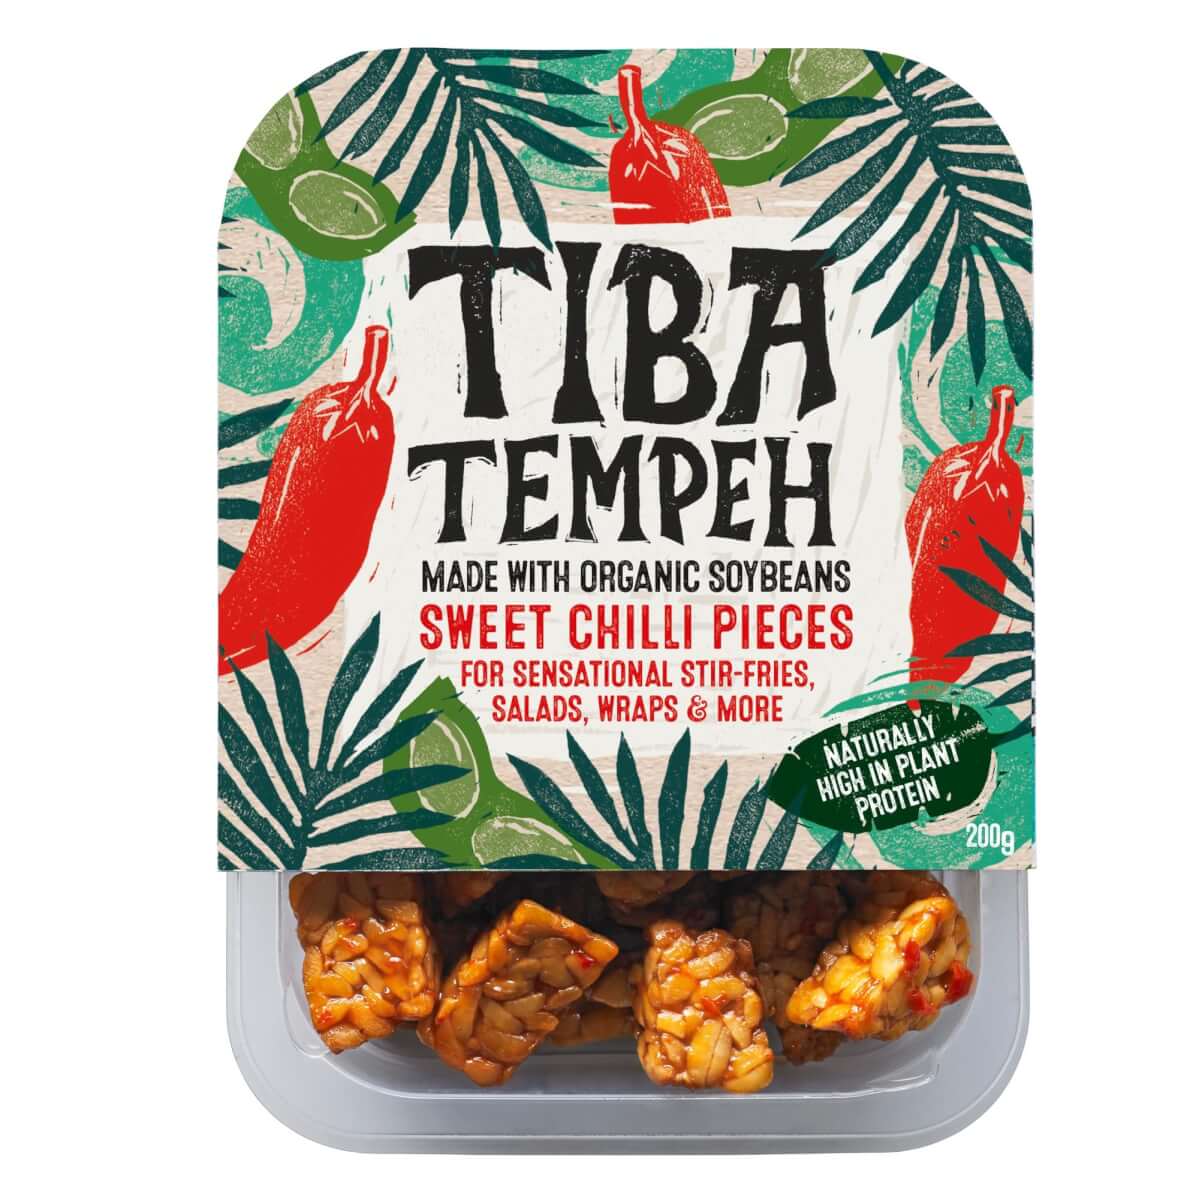 Tiba TeTiba Tempeh Sweet Chilli Pieces 200g £3.49mpeh Sweet Chilli Pieces 200g £3.49